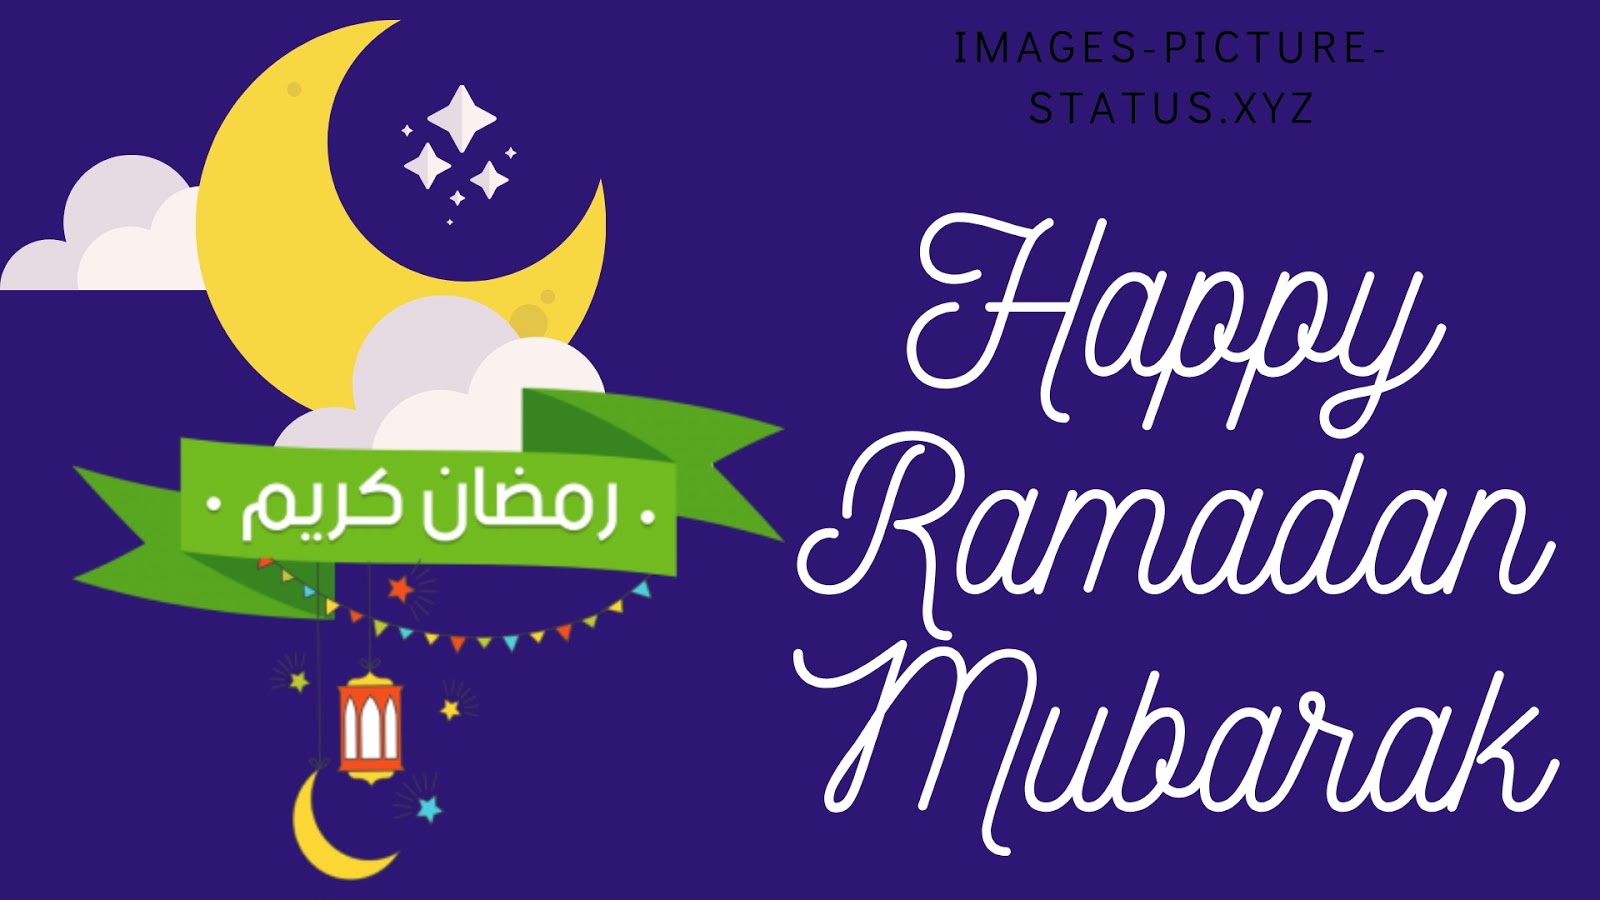 Happy Ramadhan Kareem Greetings Image Picture For